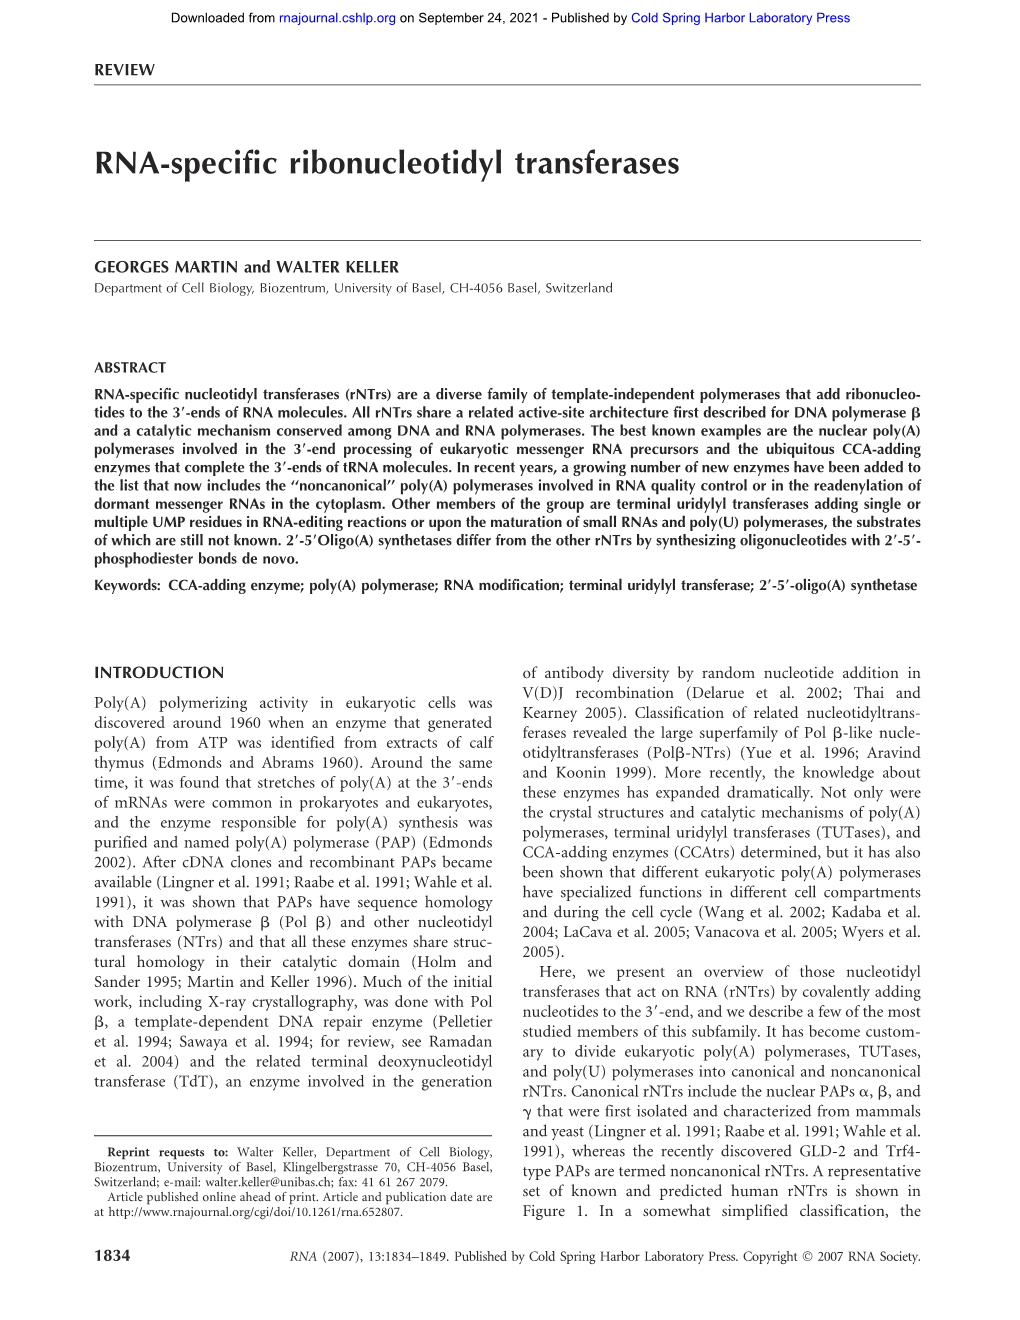 RNA-Specific Ribonucleotidyl Transferases